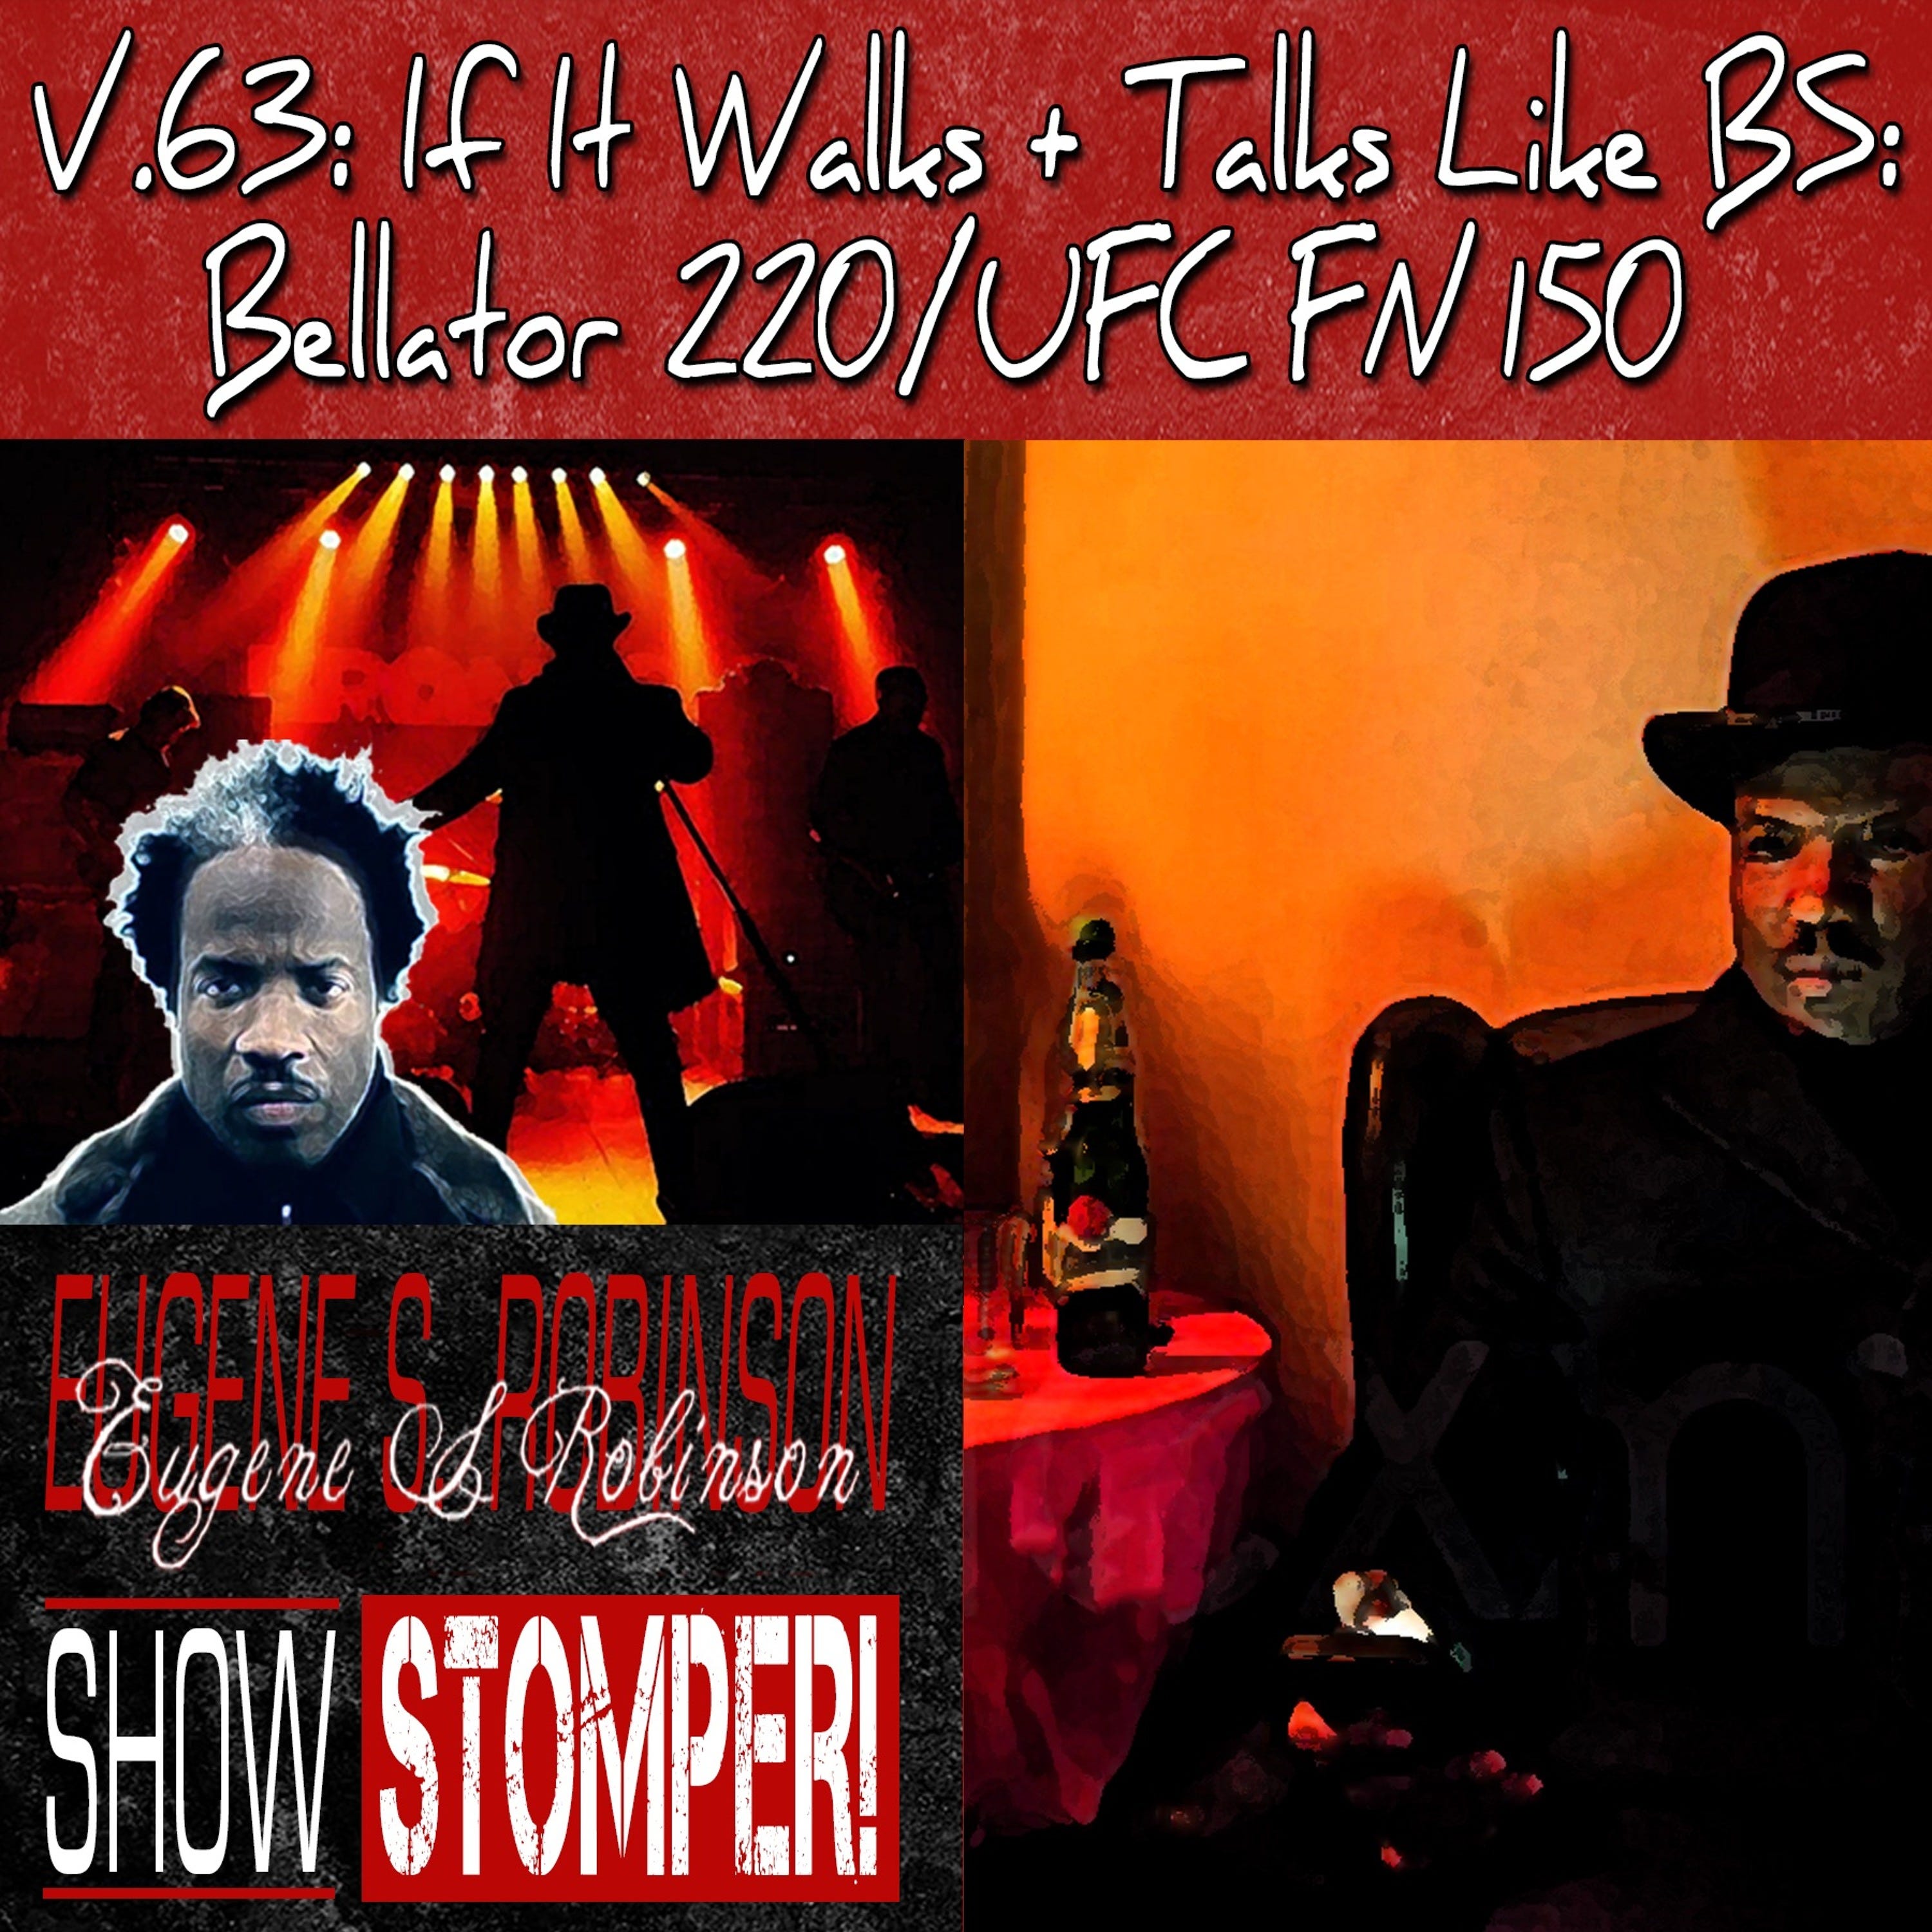 V.63 If It Walks + Talks Like BS Bellator 220UFC FN 150 On The Eugene S. Robinson Show Stompe